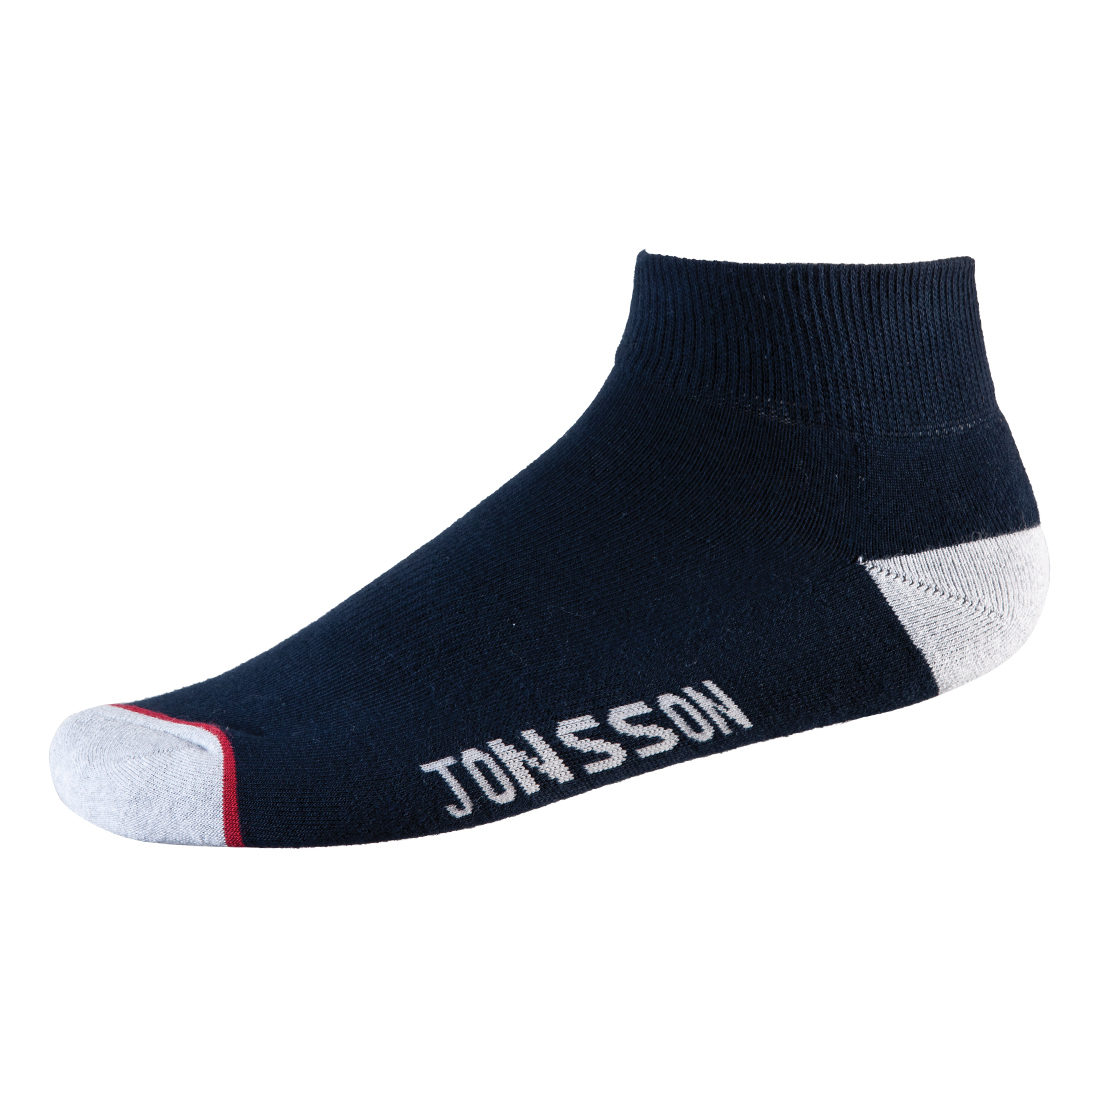 Jonsson Workwear | Low Cut Socks